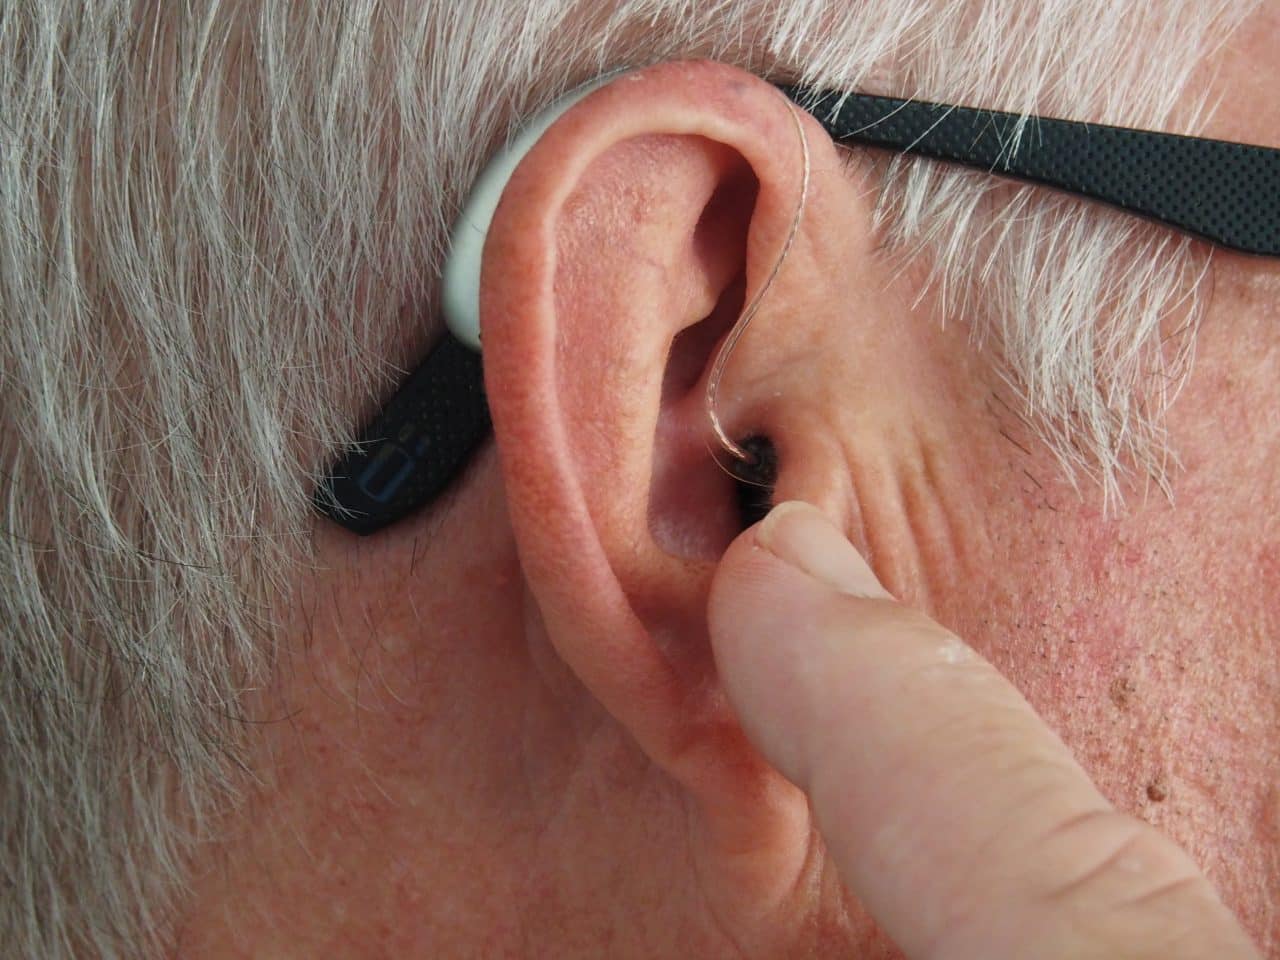 Older man pointing at his hearing aid.